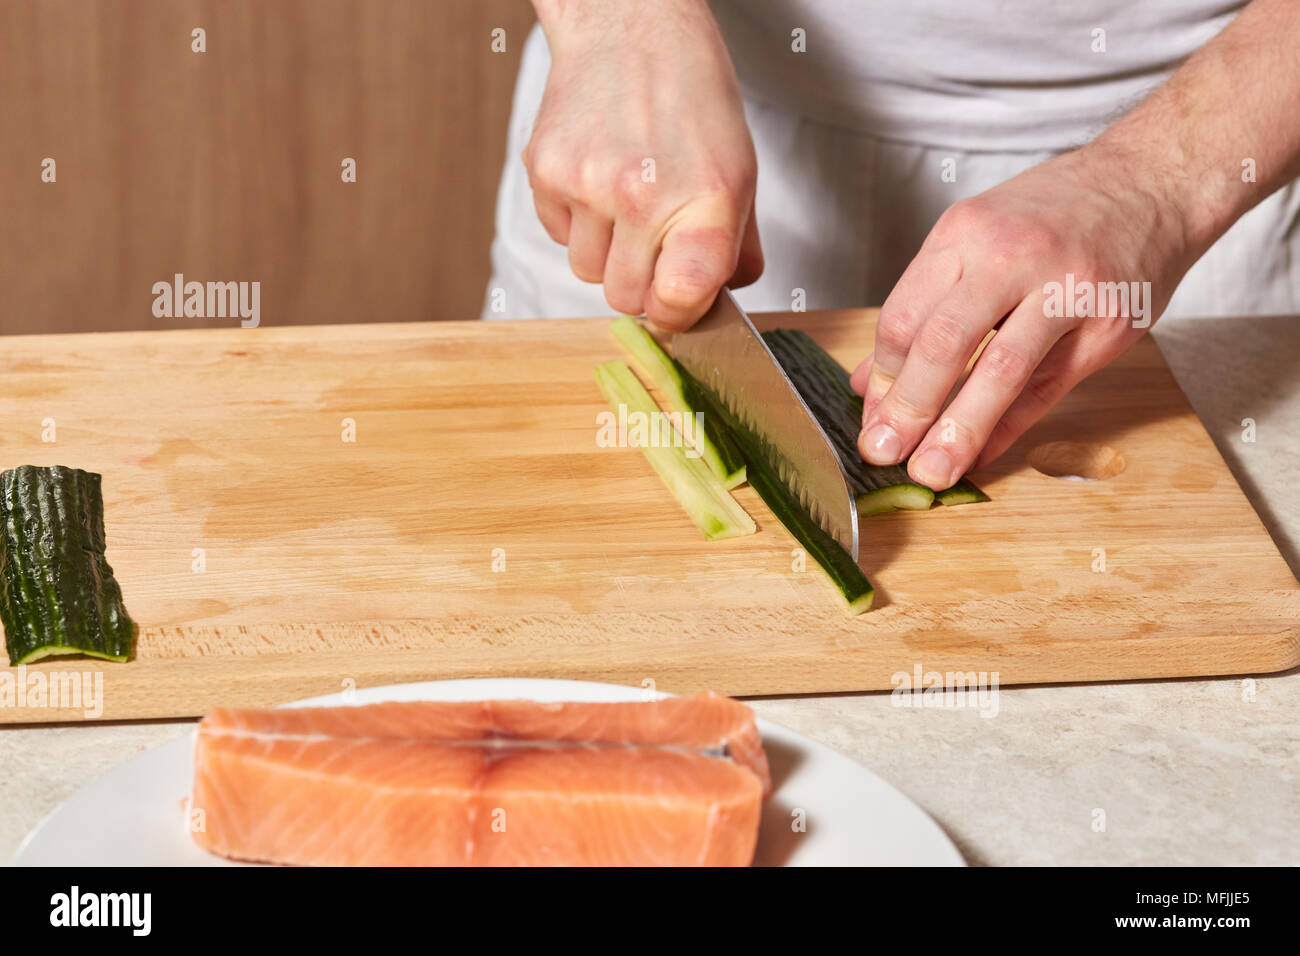 https://c8.alamy.com/comp/MFJJE5/chef-making-sushi-rolls-hands-cutting-cucumber-and-salmon-fish-MFJJE5.jpg